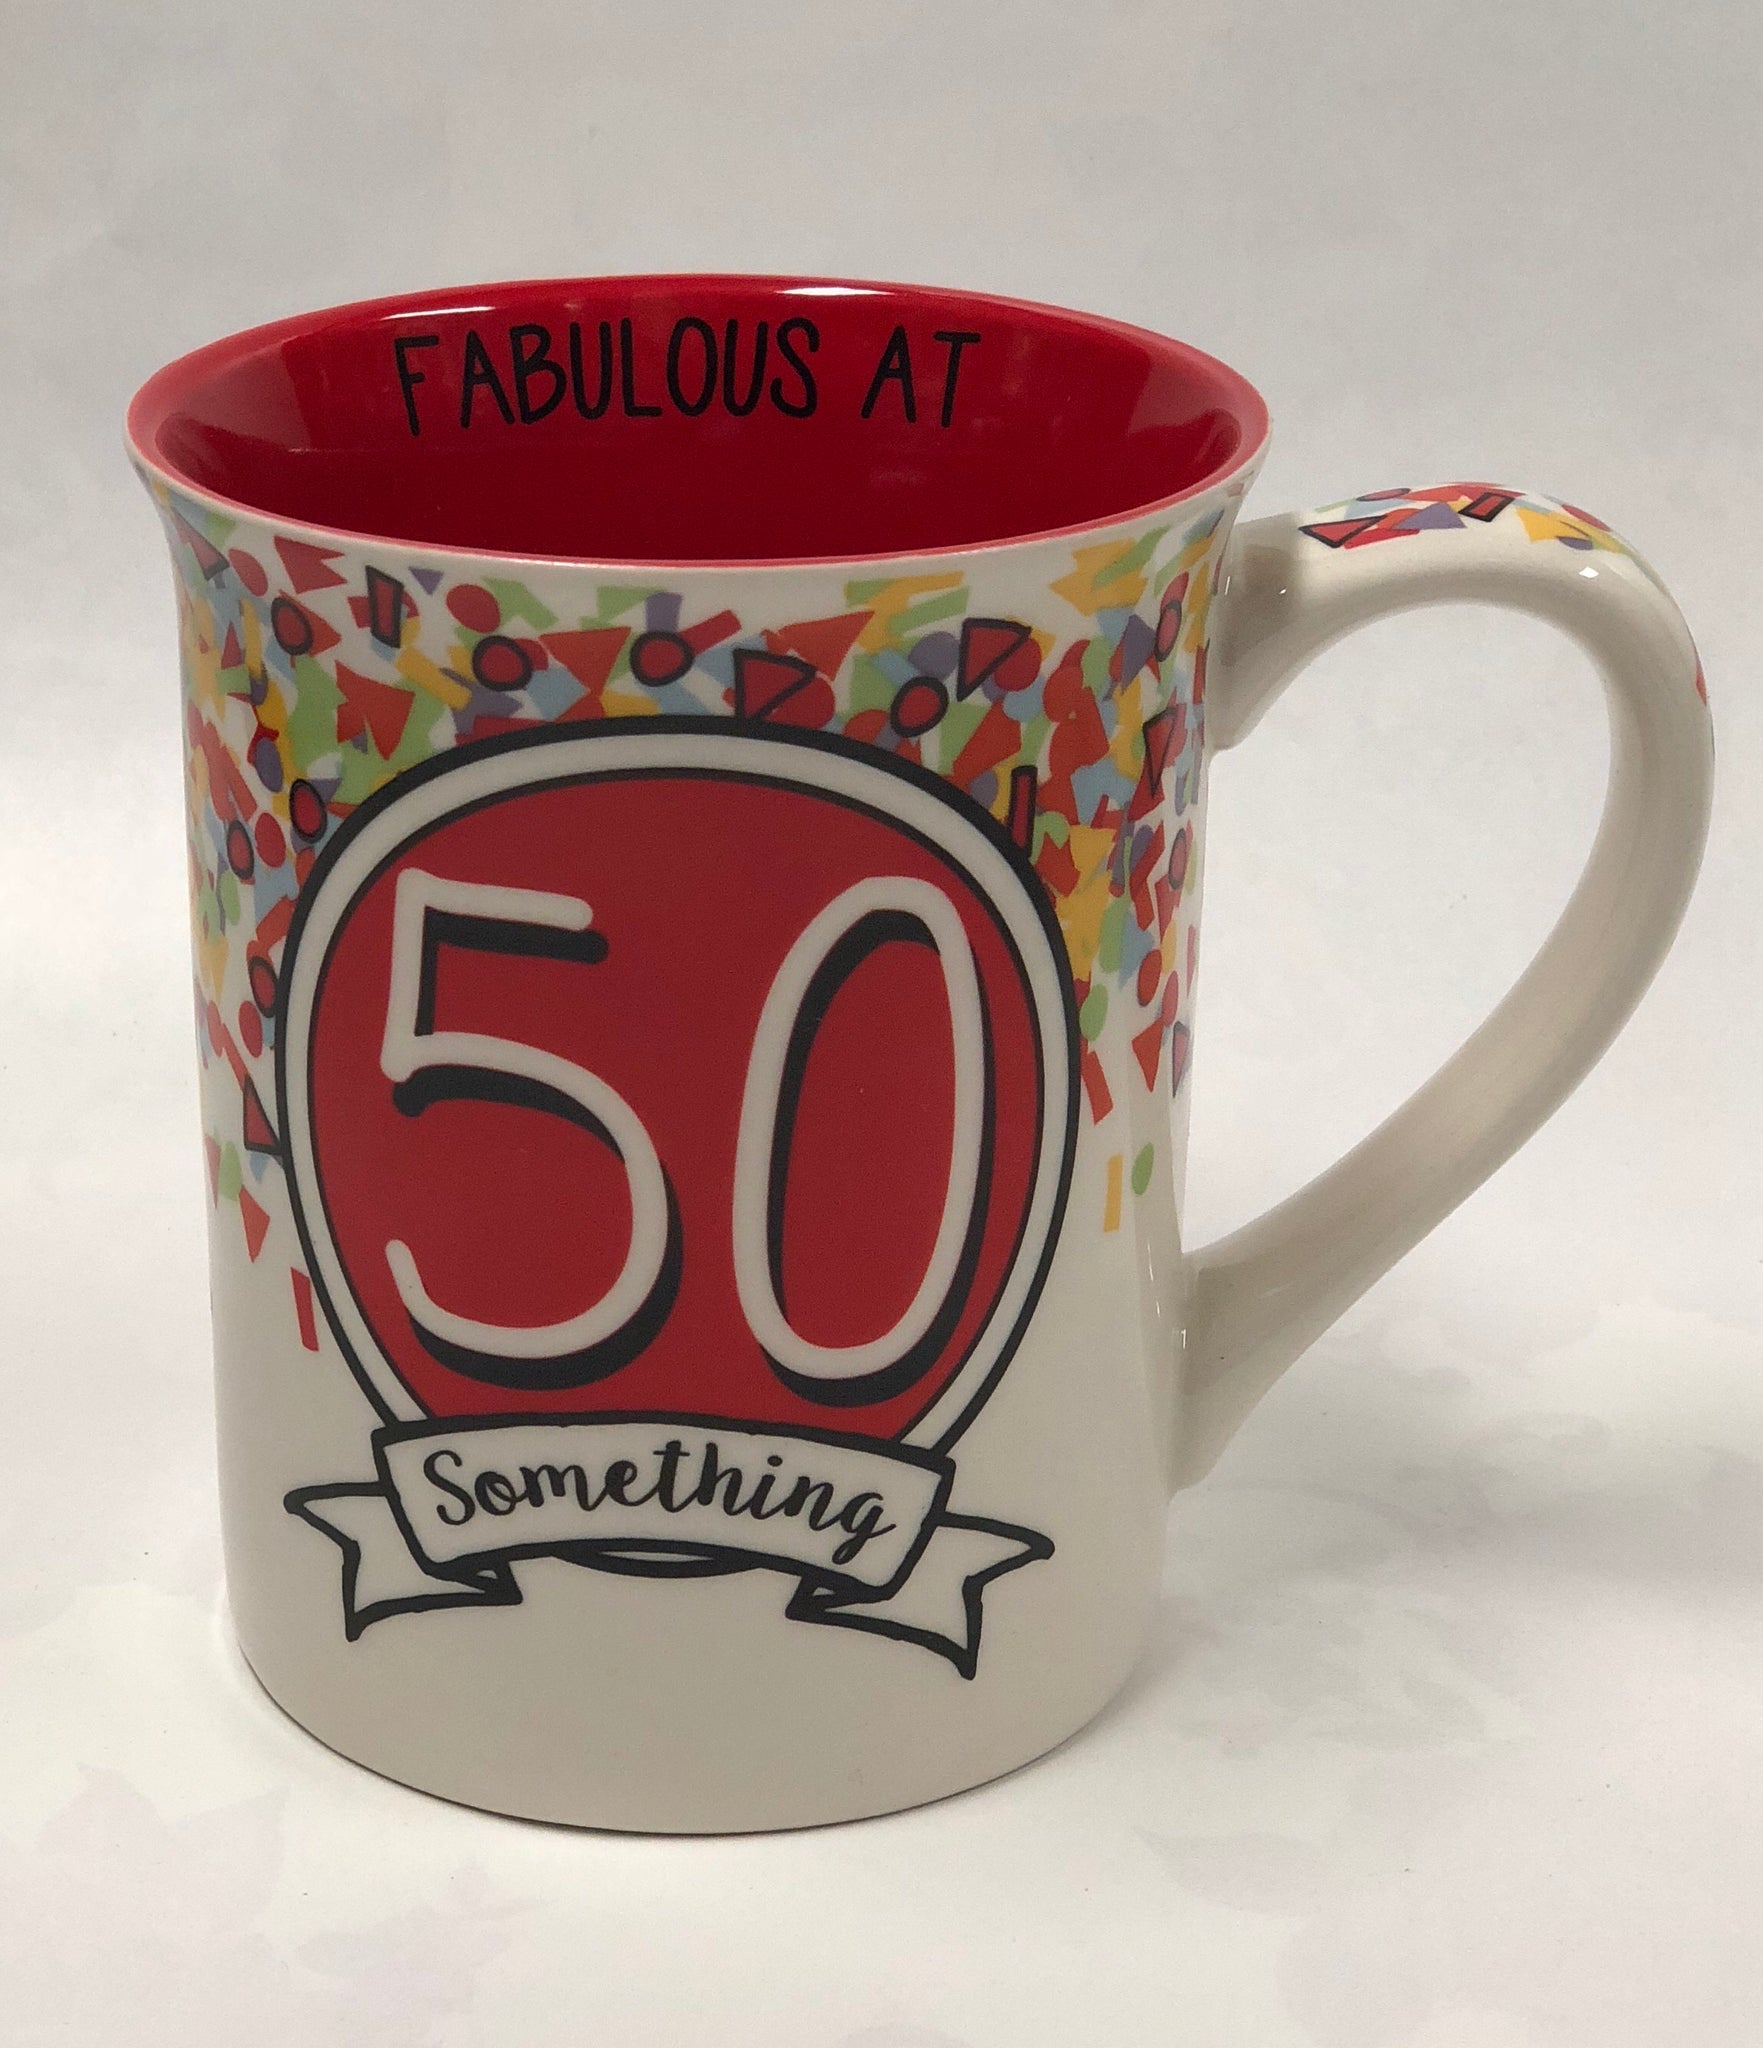 50 Something Mug